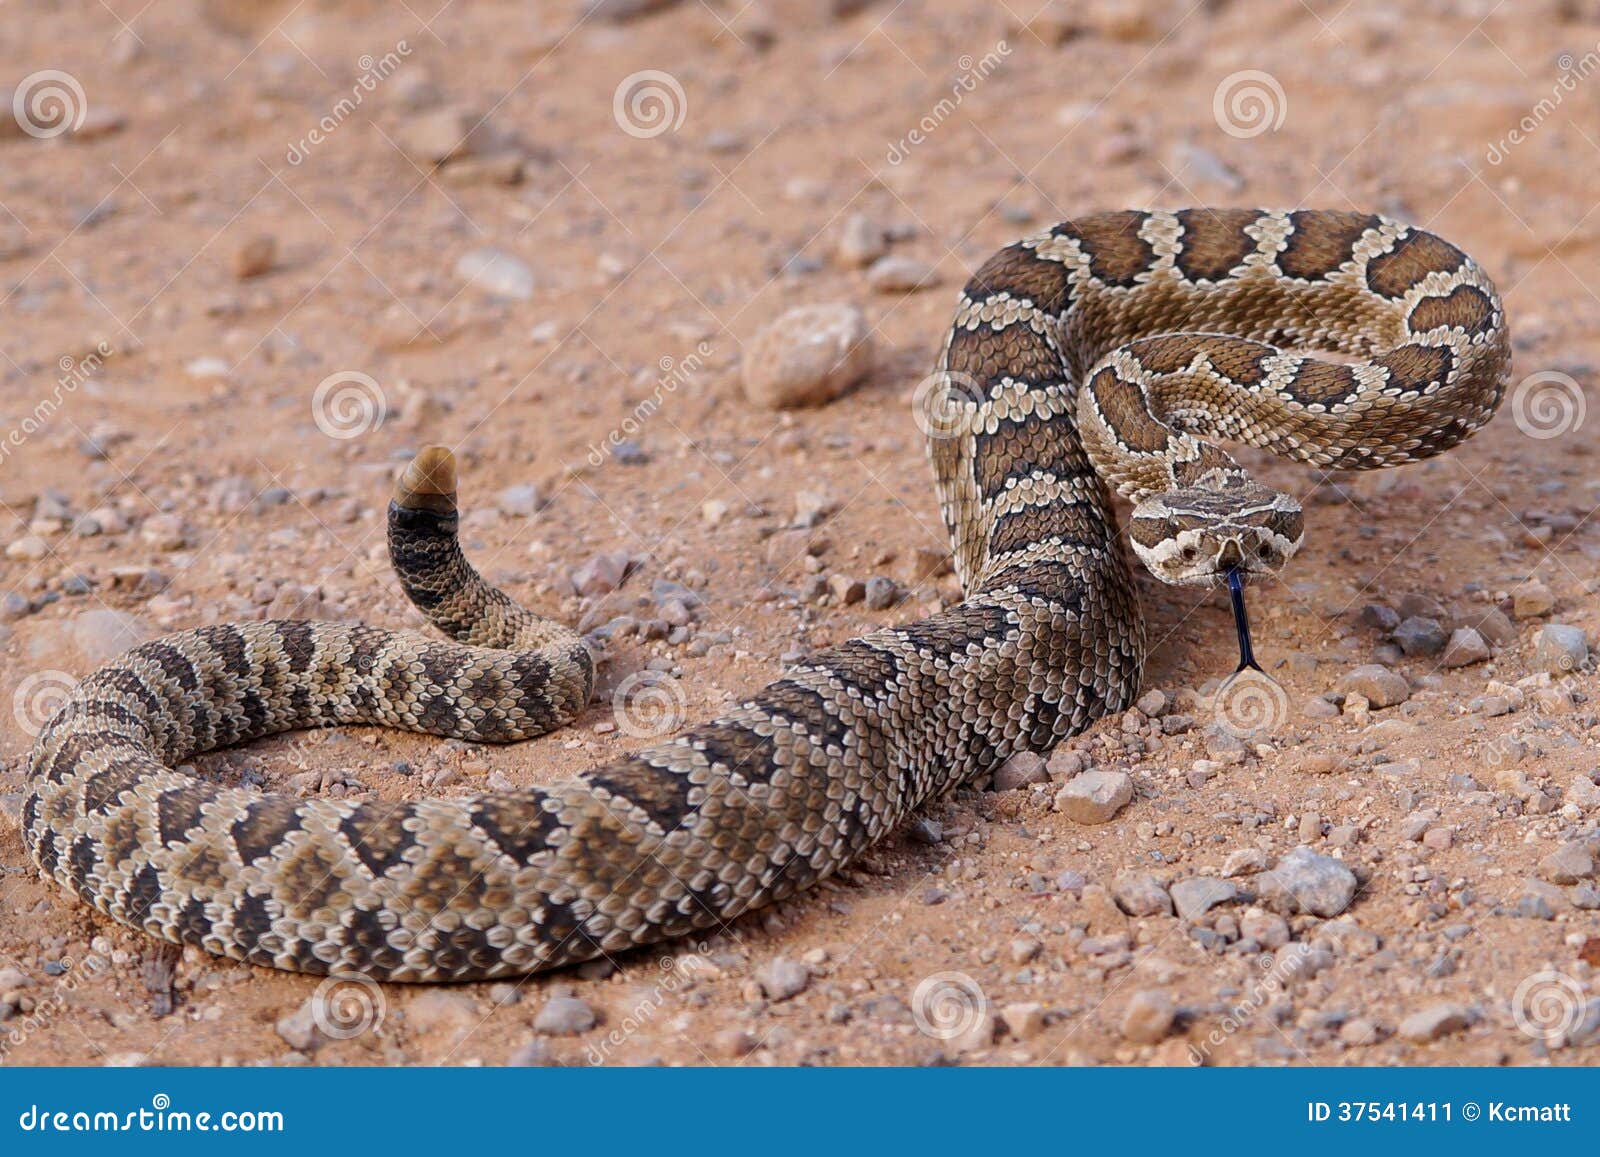 forked tongue of a rattlesnake, crotalus oreganus lutosus